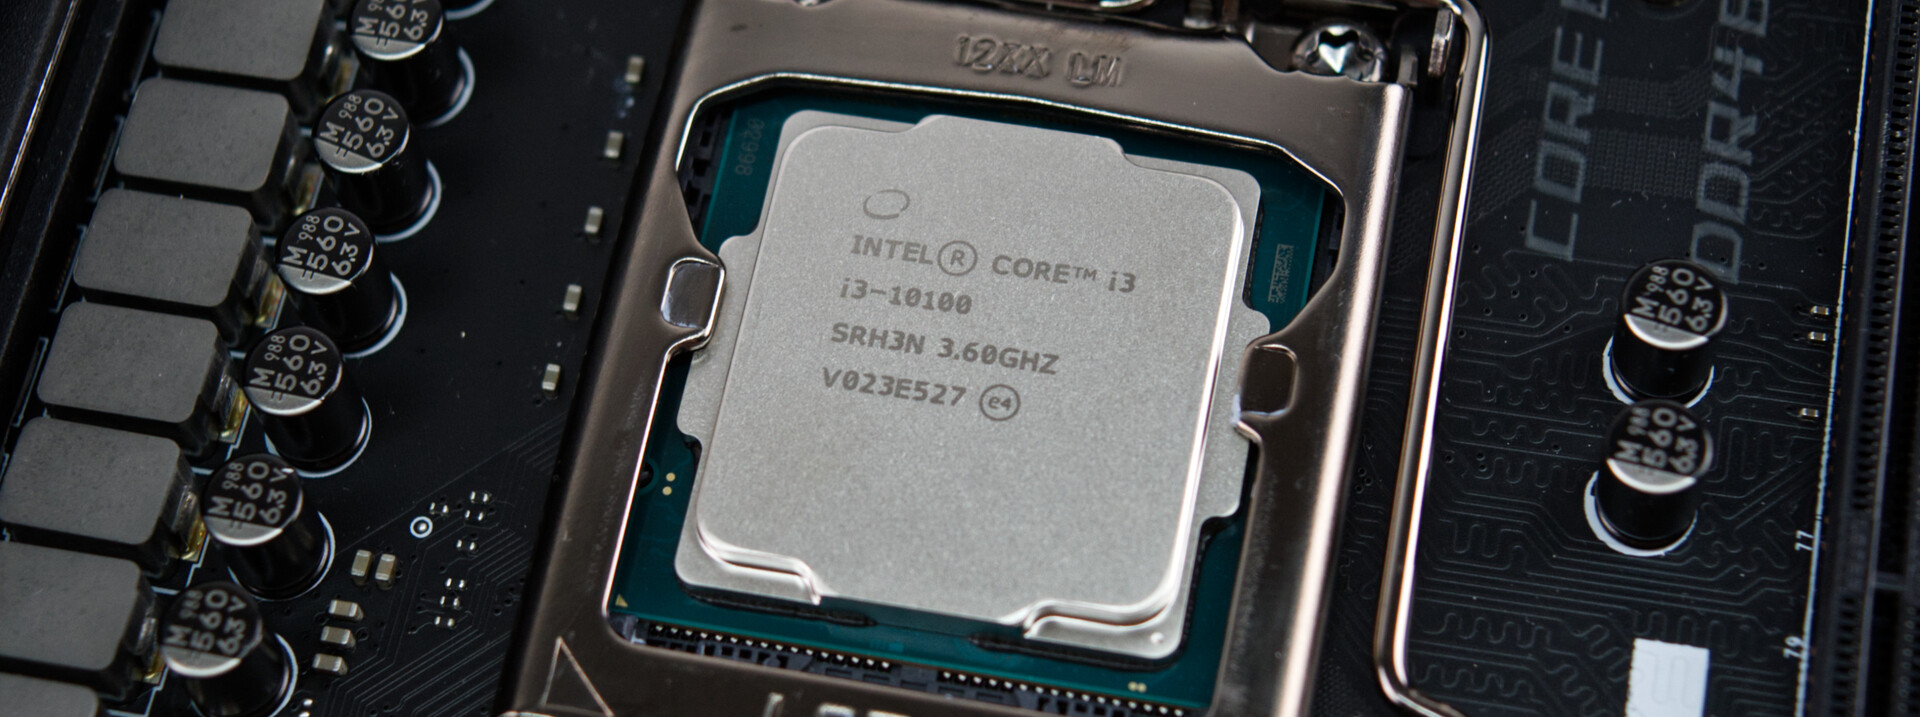 Port klassiek september Intel Core i3-10100 Desktop Processor - Benchmarks and Specs -  NotebookCheck.net Tech